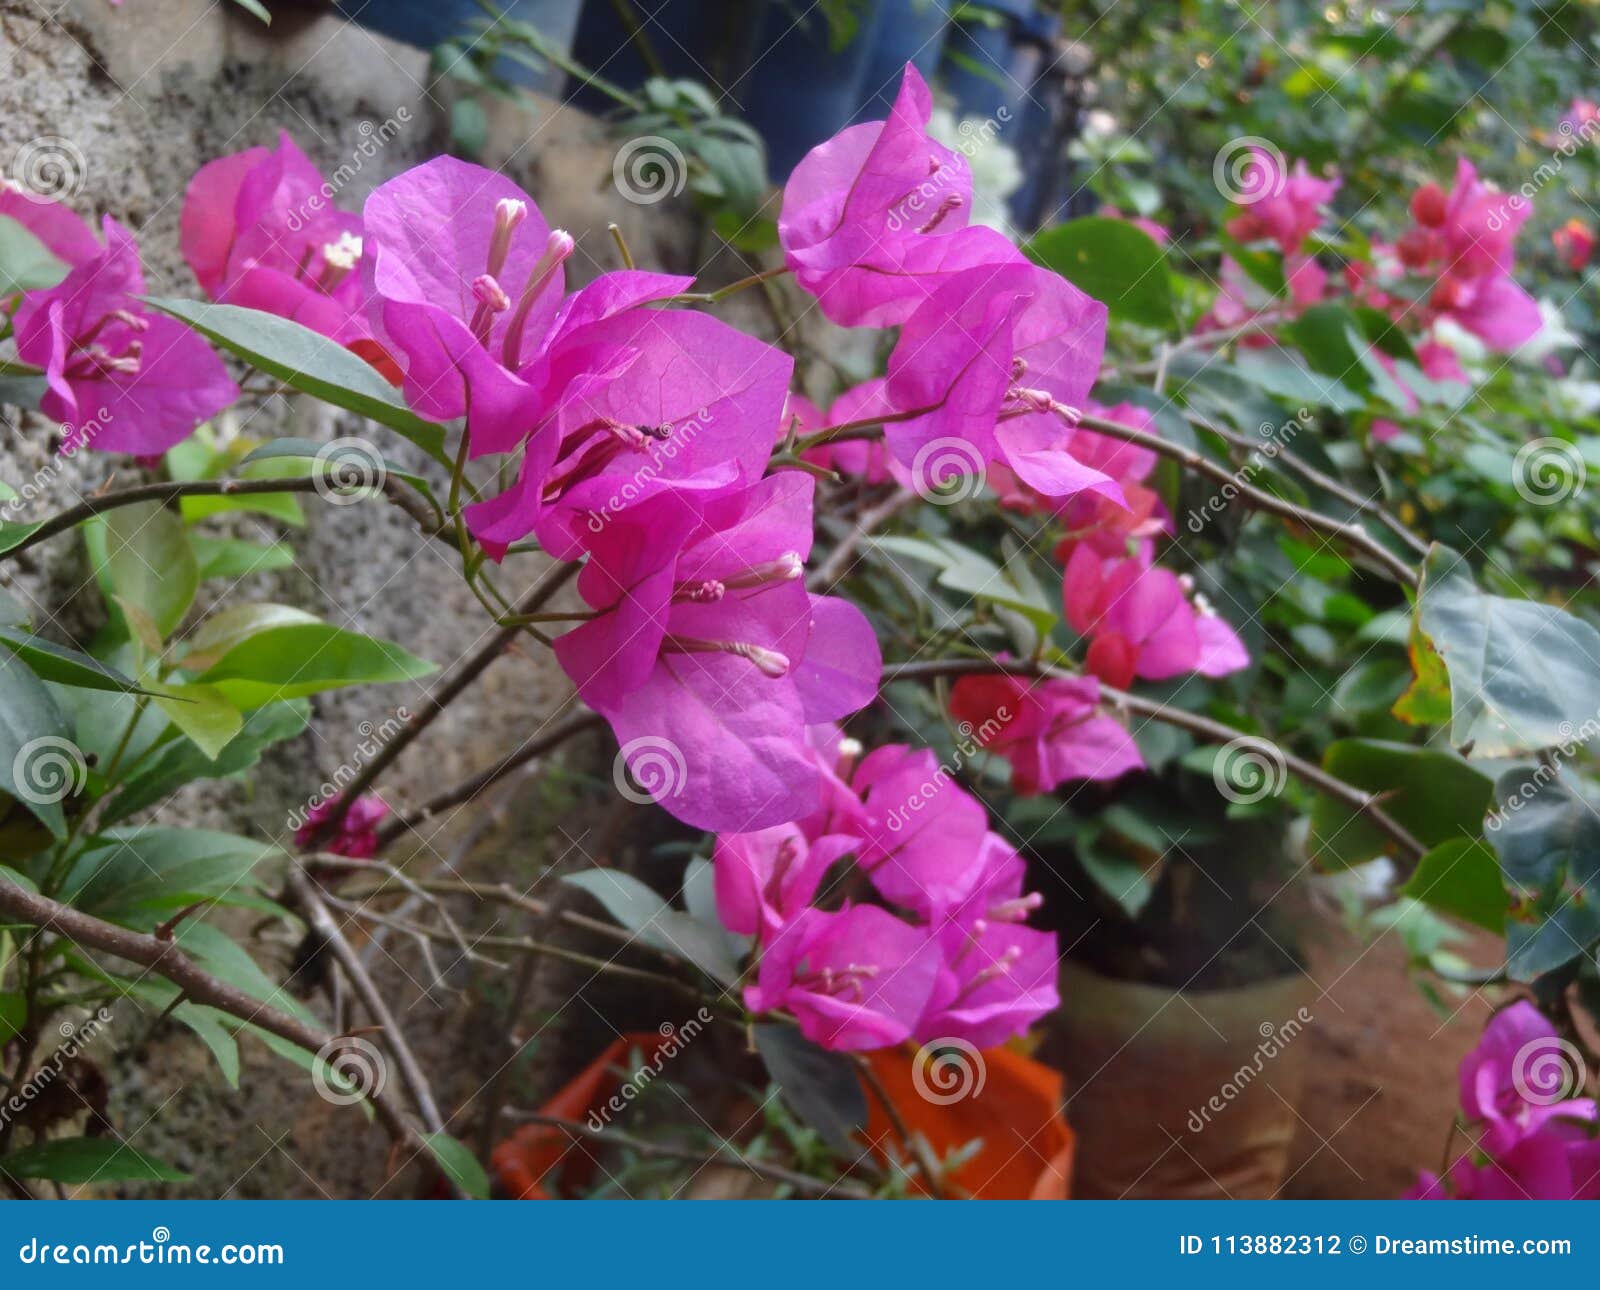 bougainvillea or bouganvilla flowers in pink colour